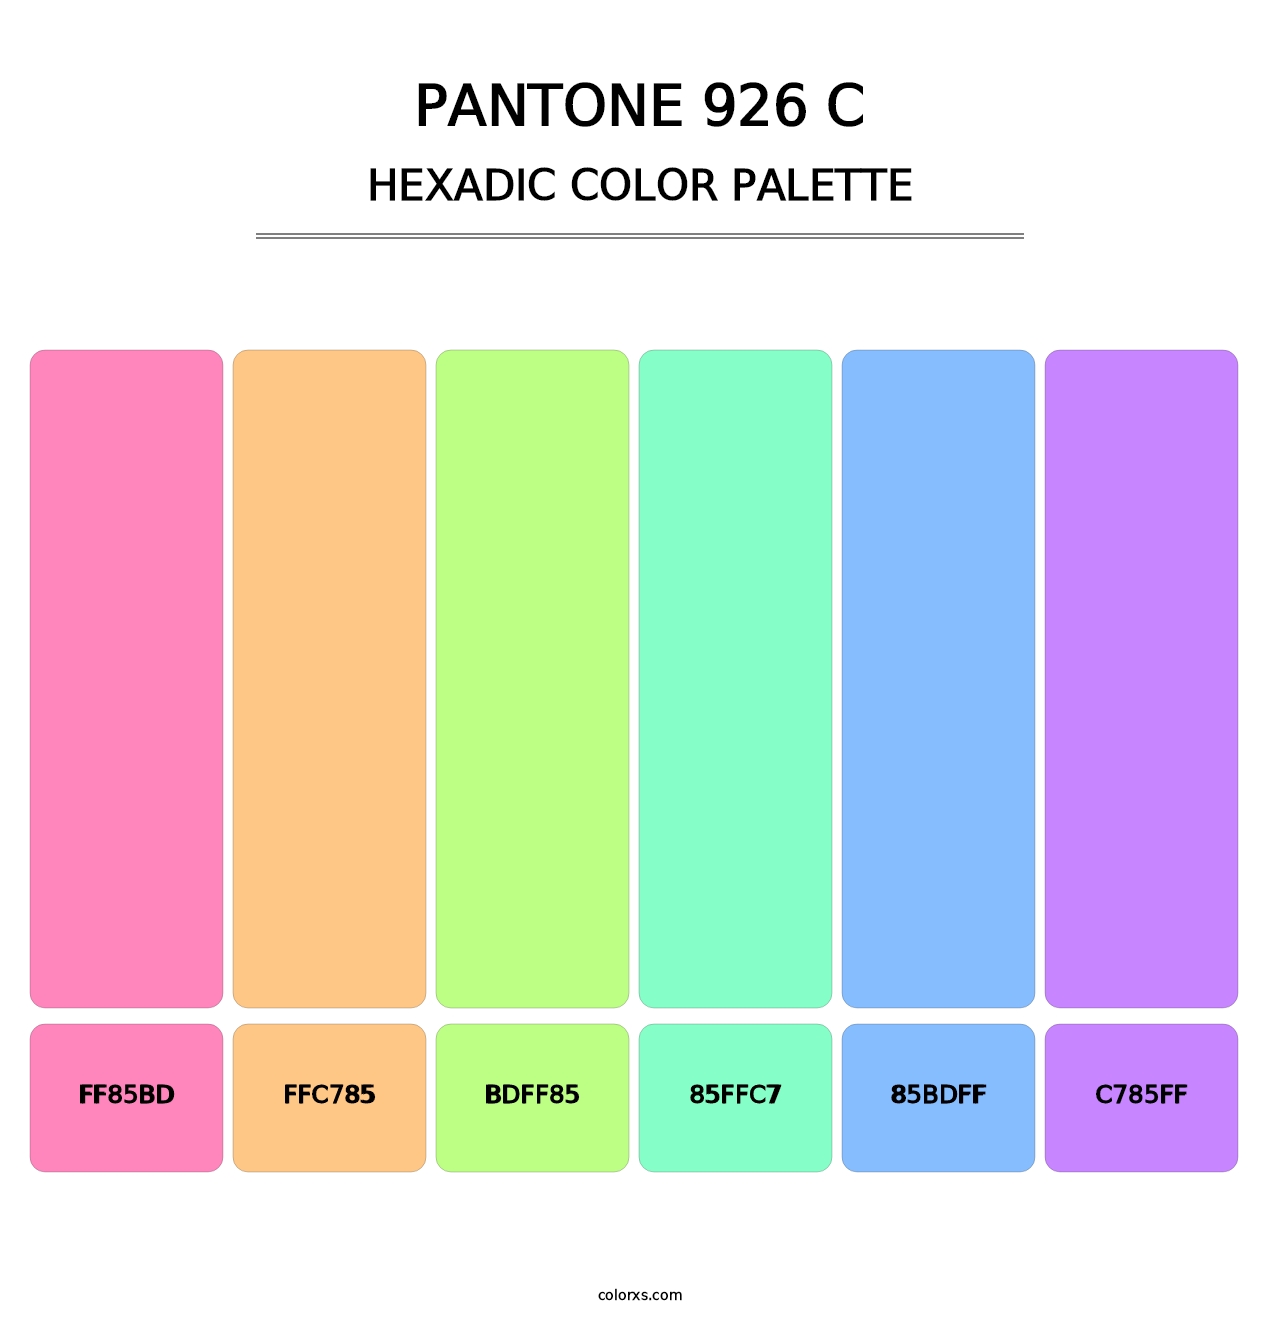 PANTONE 926 C - Hexadic Color Palette